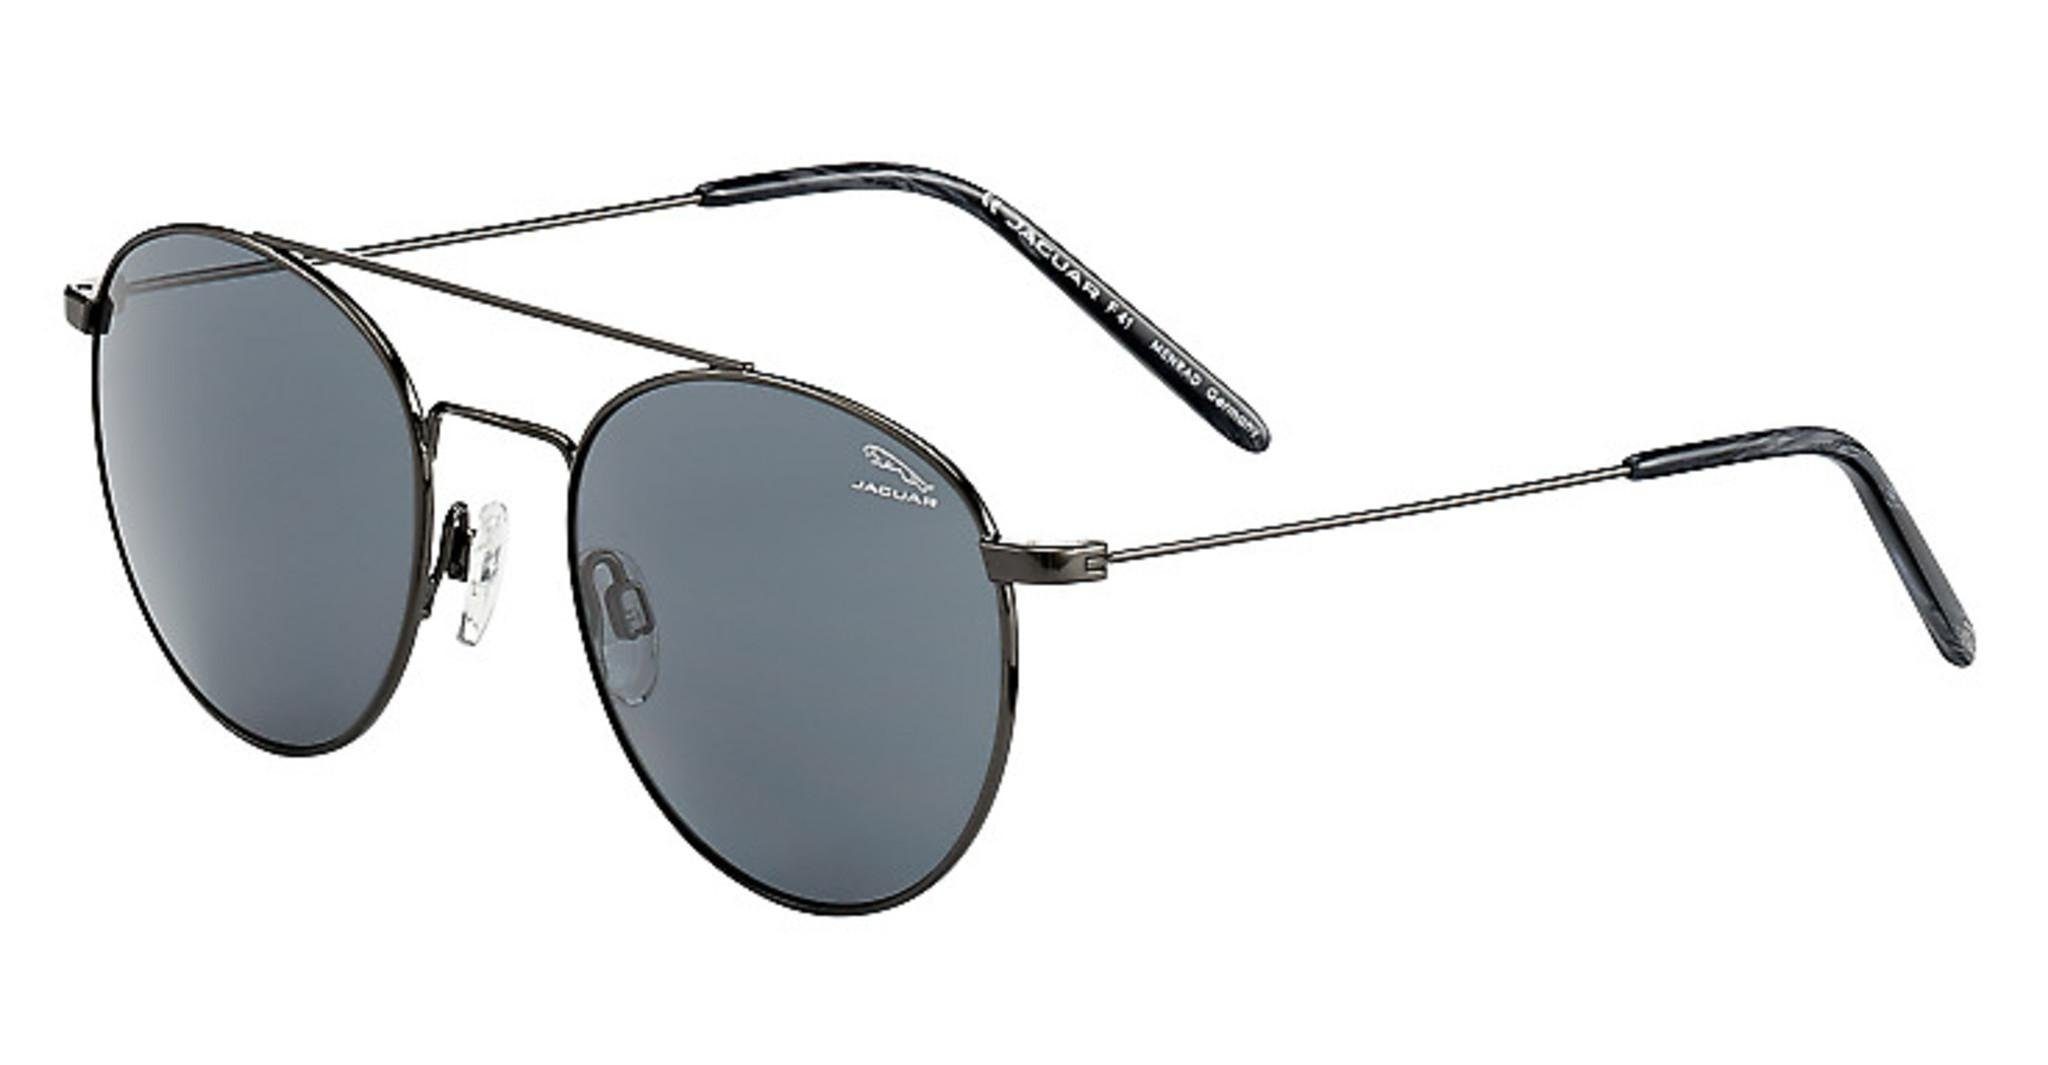 Eyewear Sonnenbrille grau 37455 Jaguar